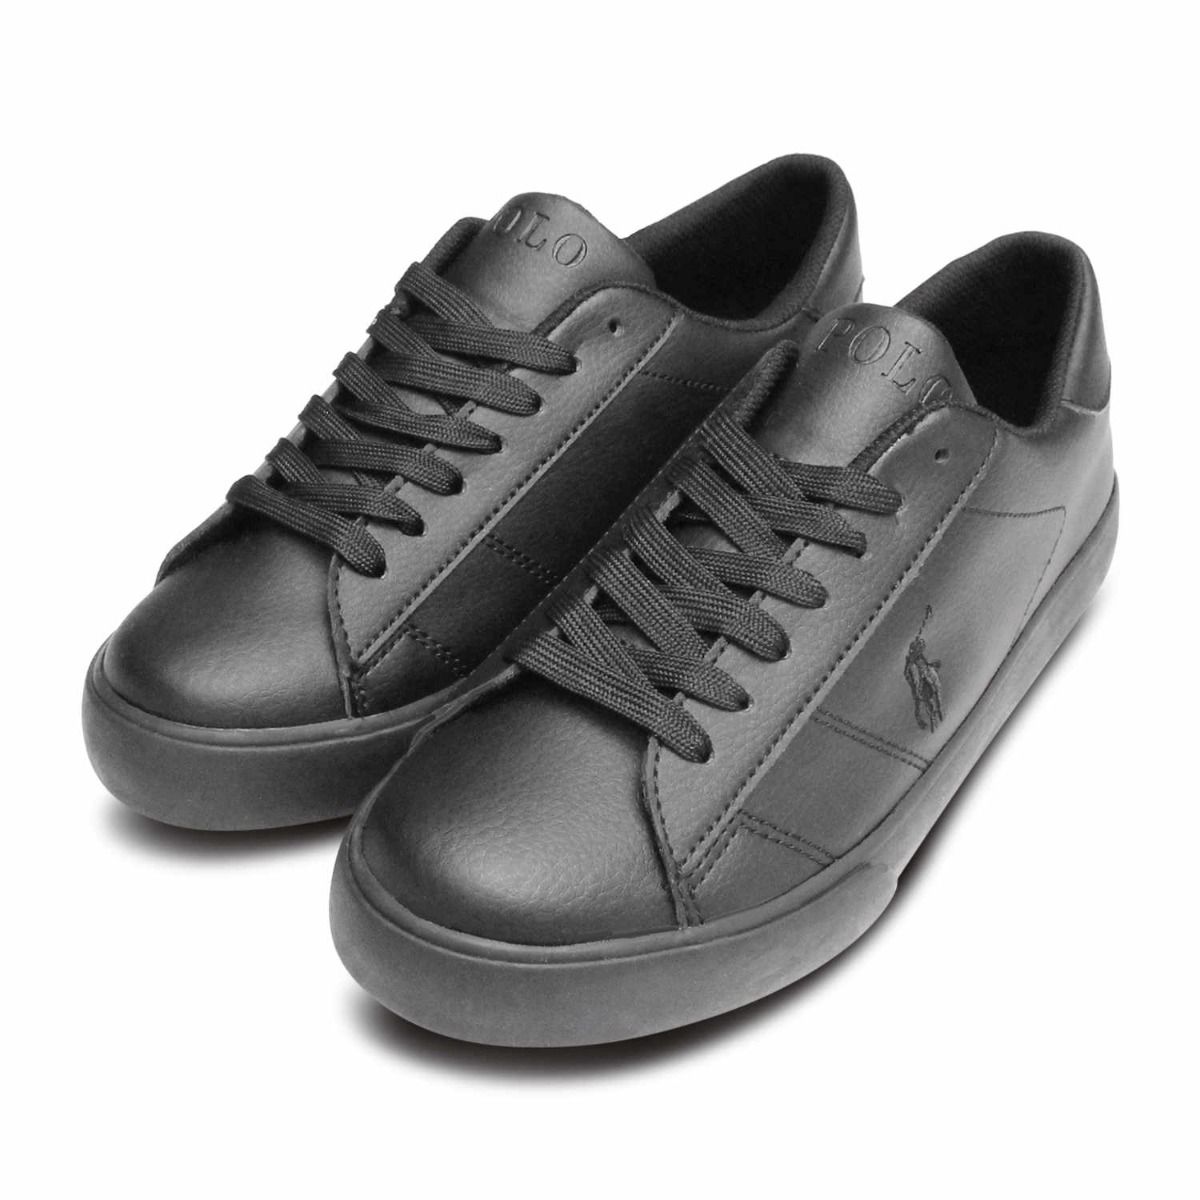 Ralph Lauren Polo All Black Leather Smart Designer Shoes